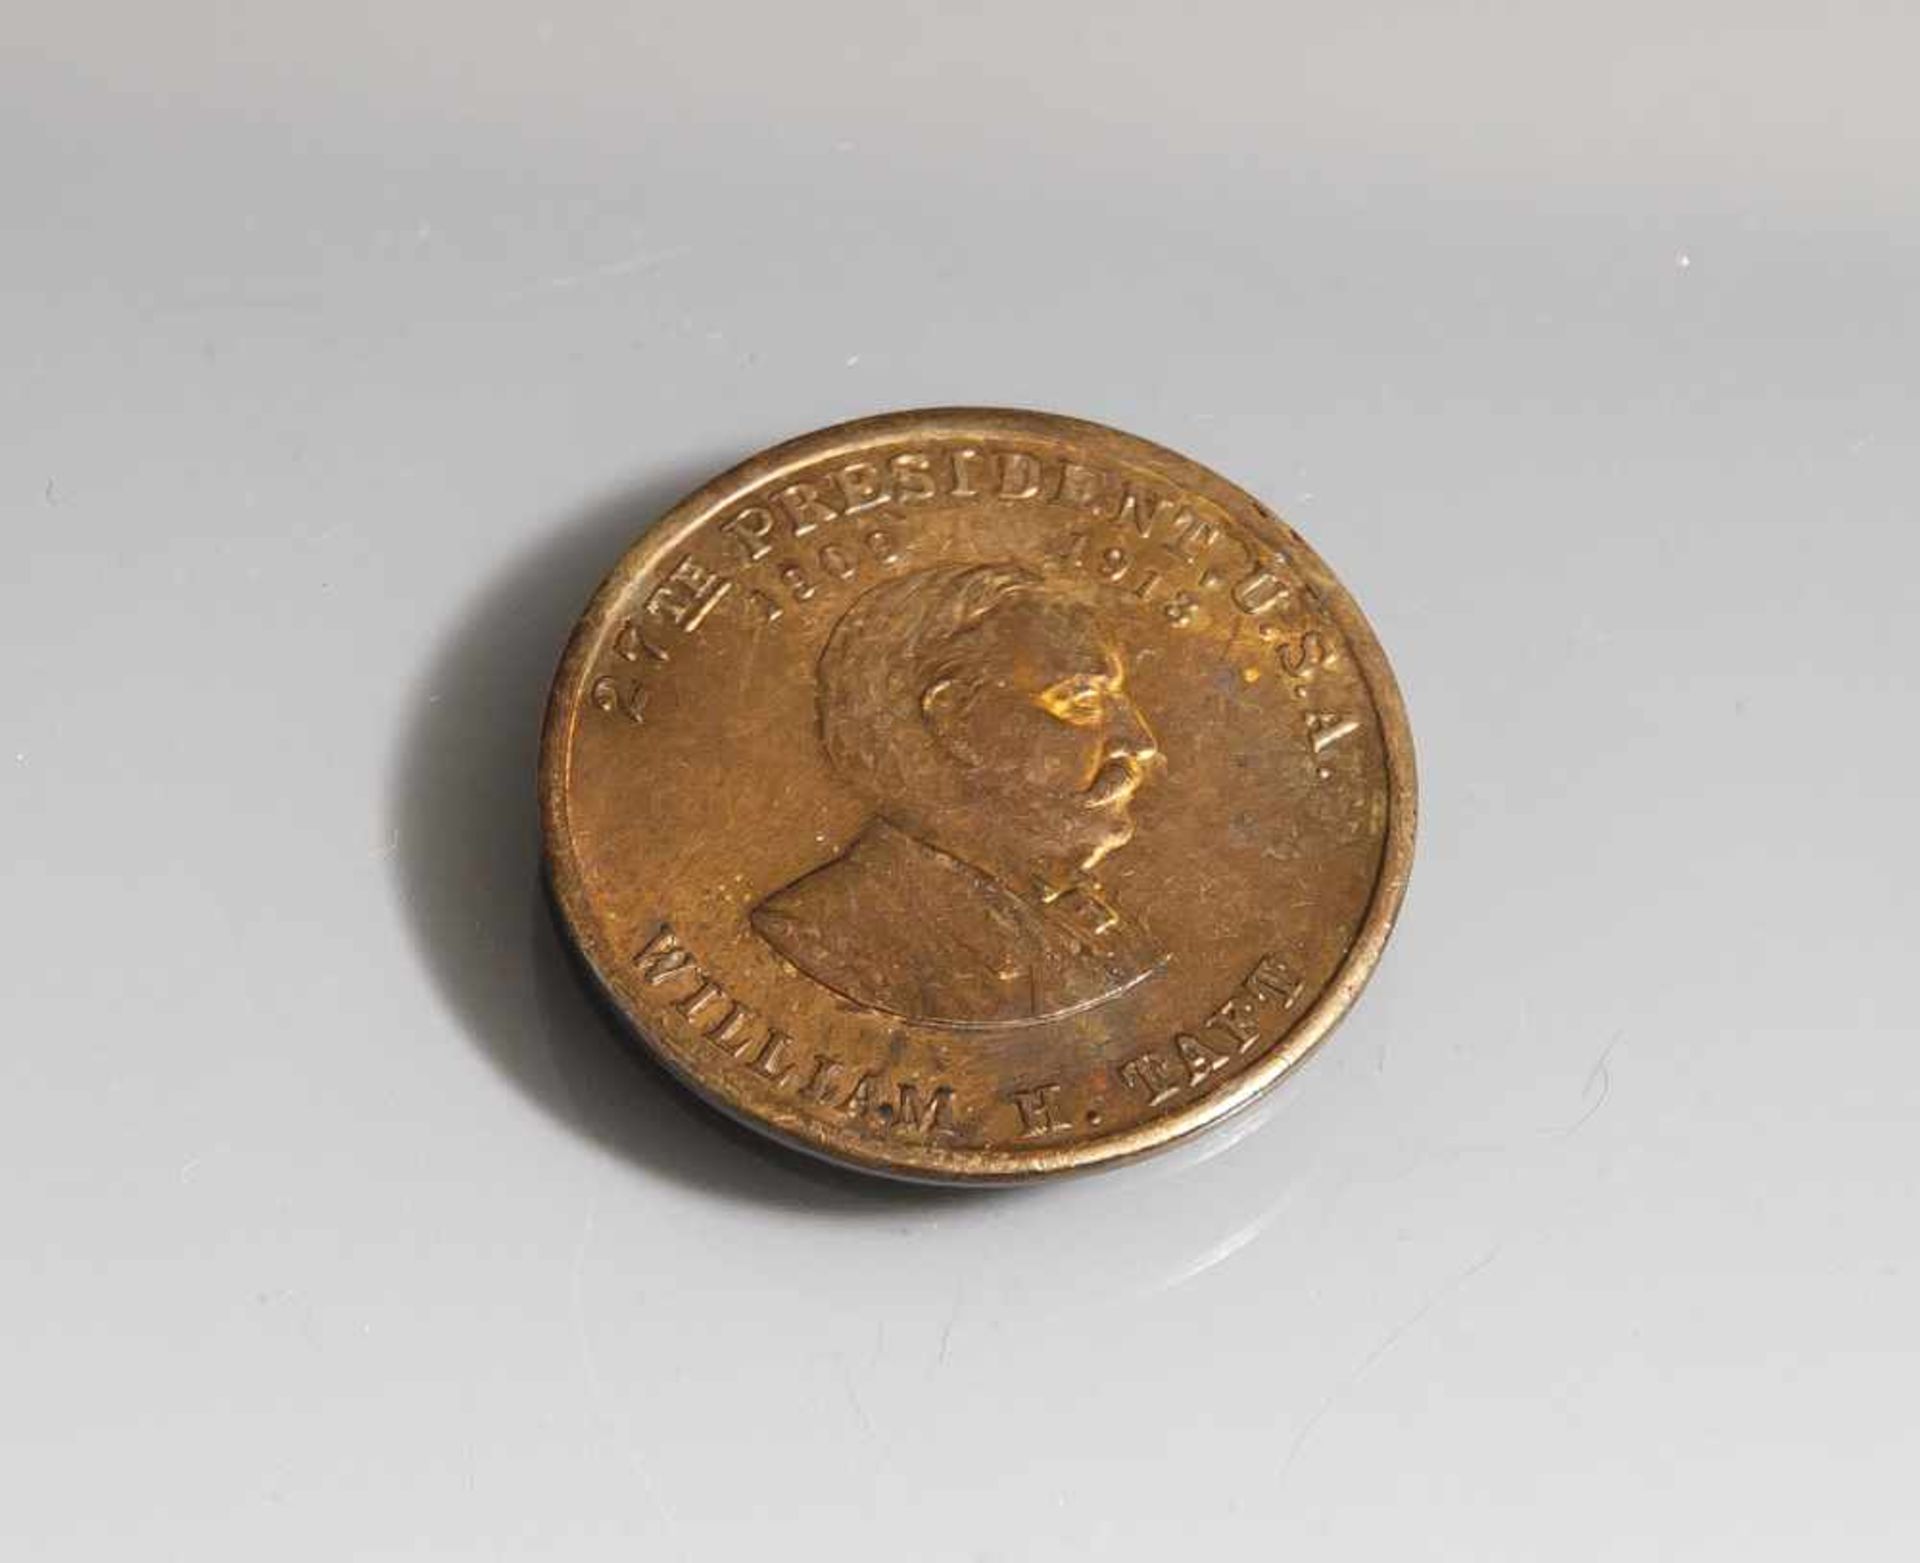 Medaille "27th President USA William H. Taft", Big Bill Taft. DM ca. 2,5 cm.